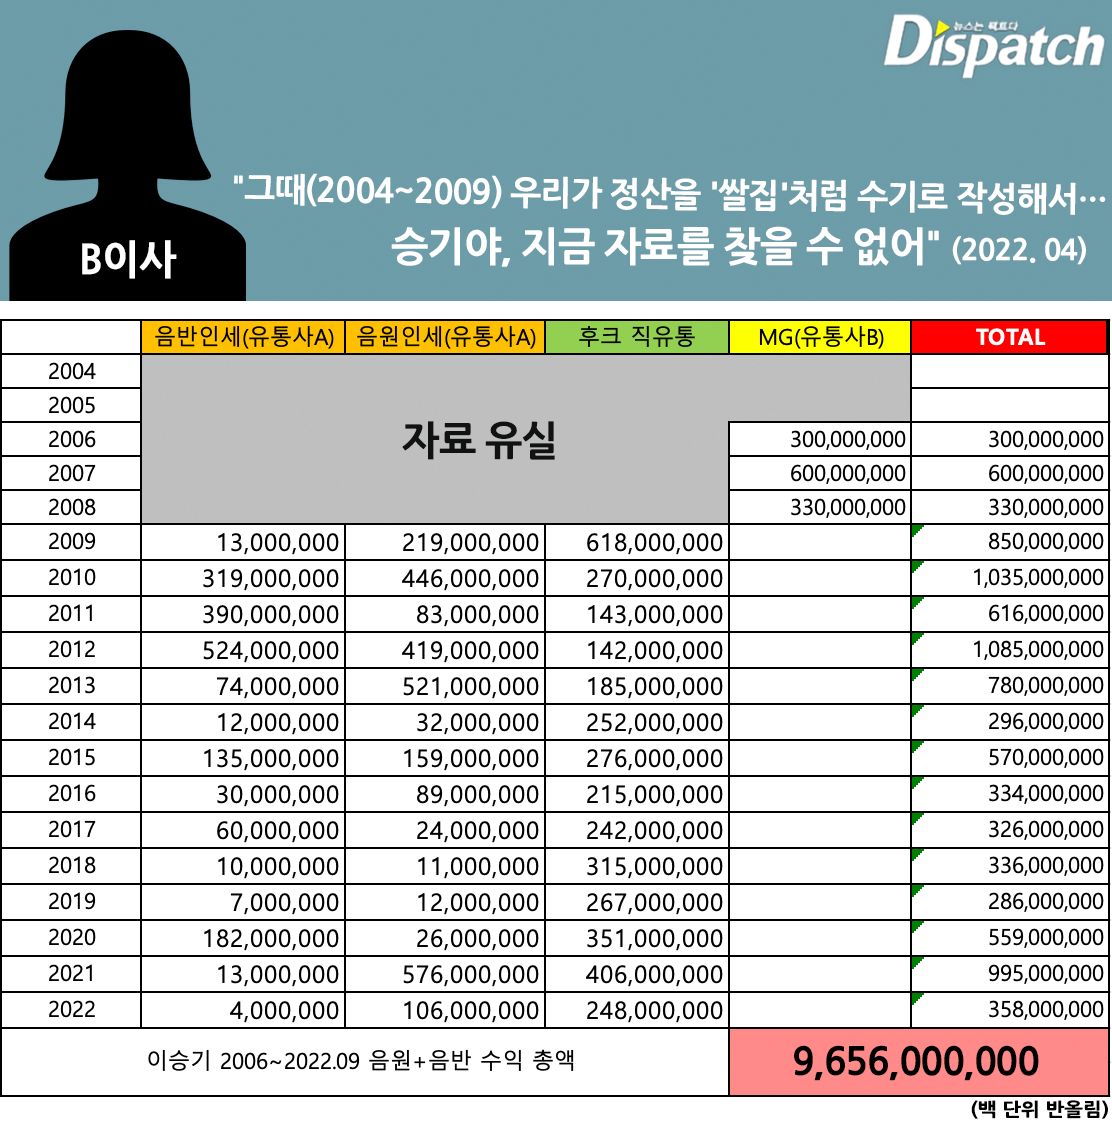 Lee Seung Gi's album sales since 2004